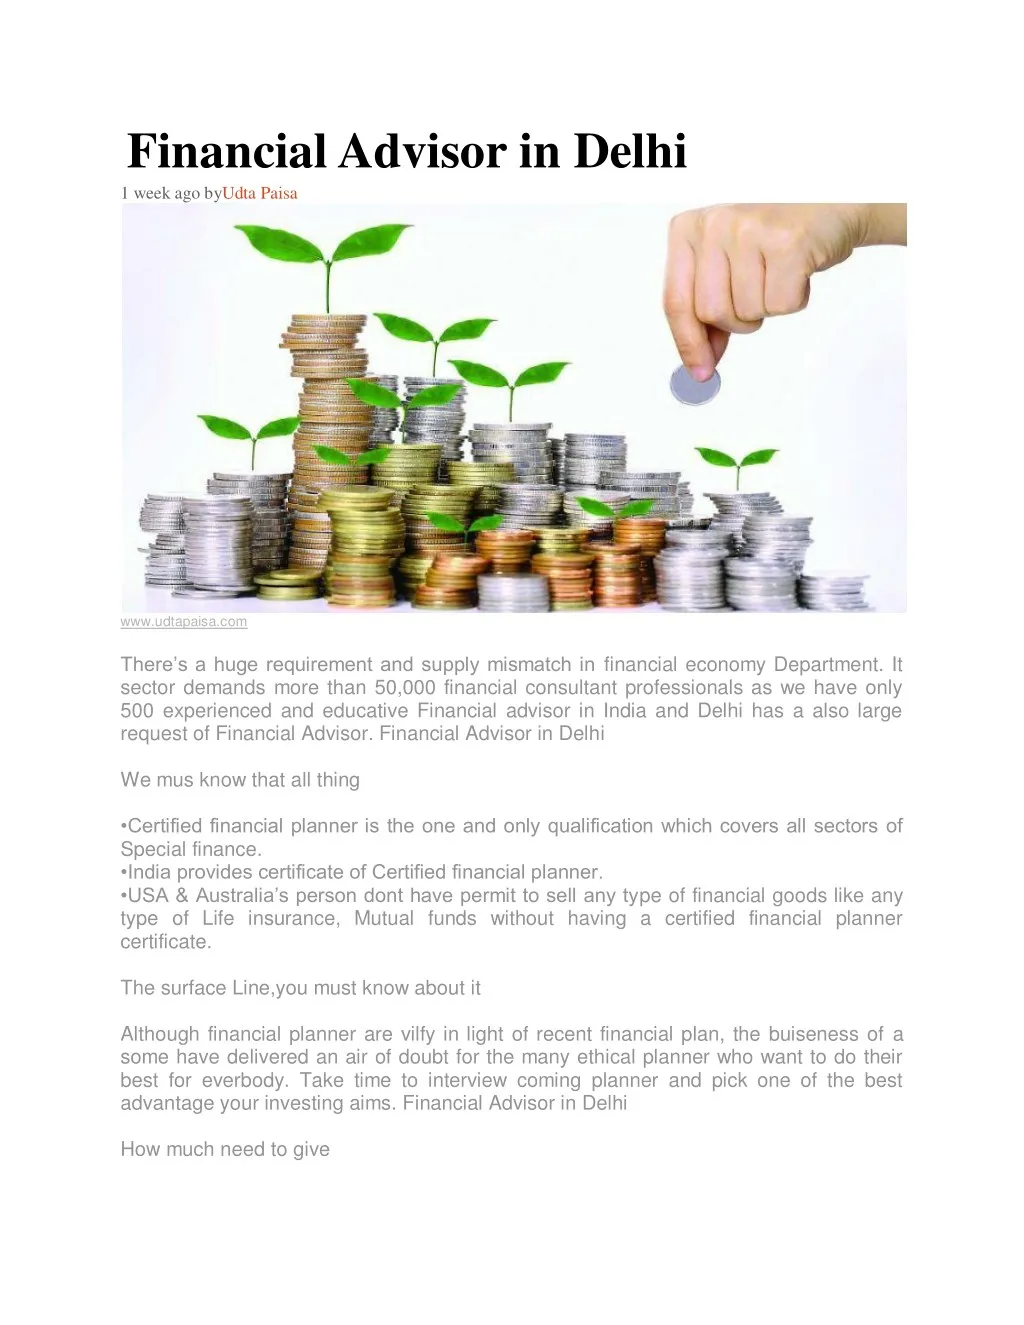 financial advisor in delhi 1 week ago byudta paisa